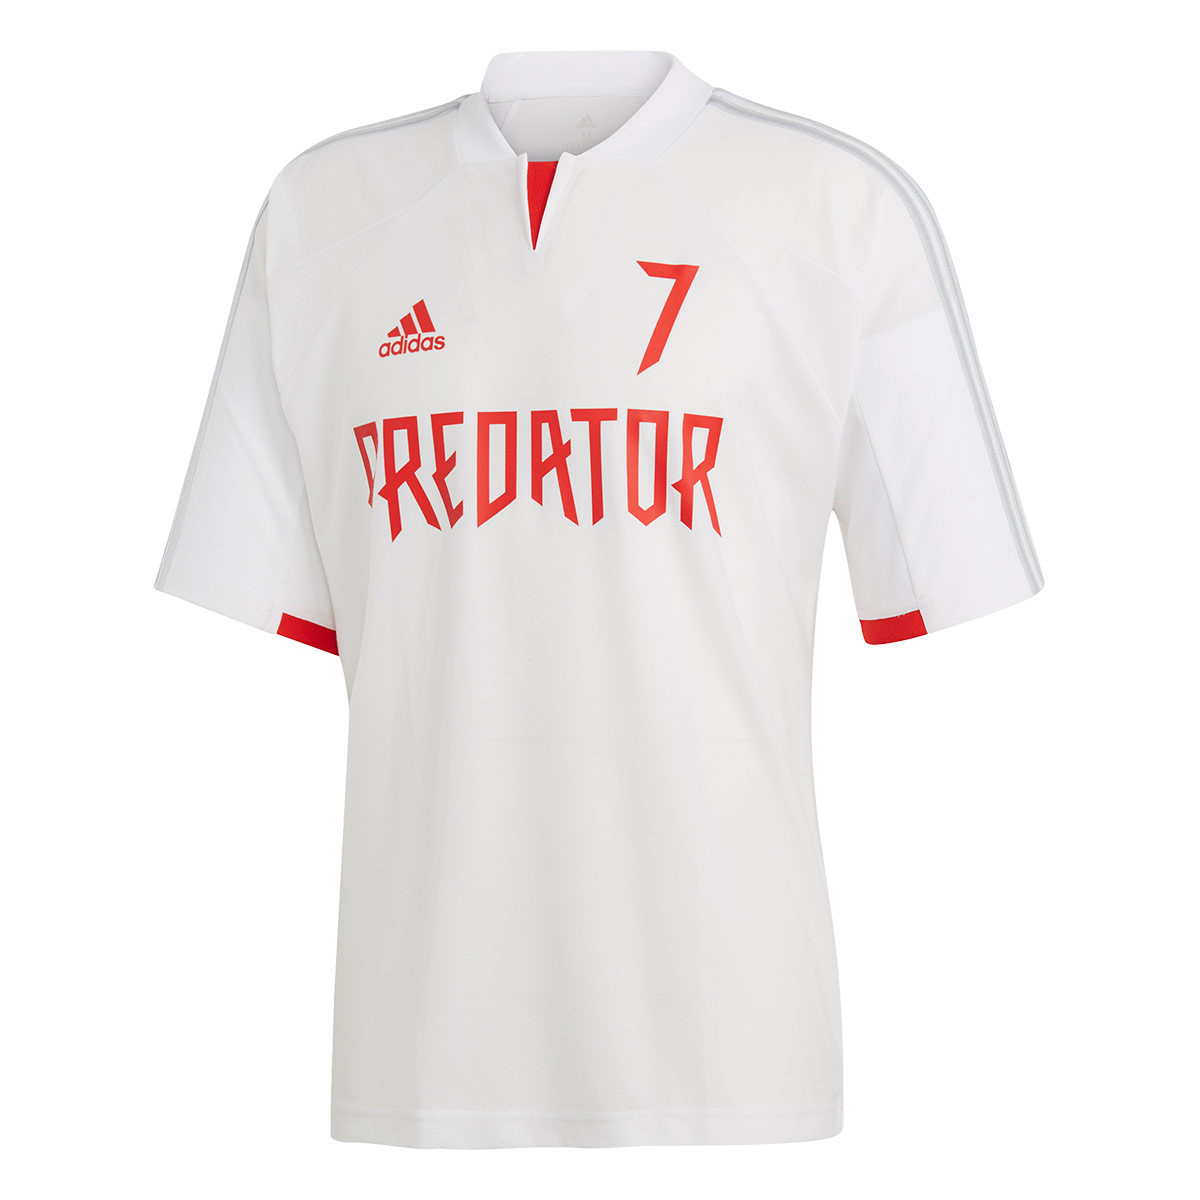 Jersey adidas Predator DB White-red 